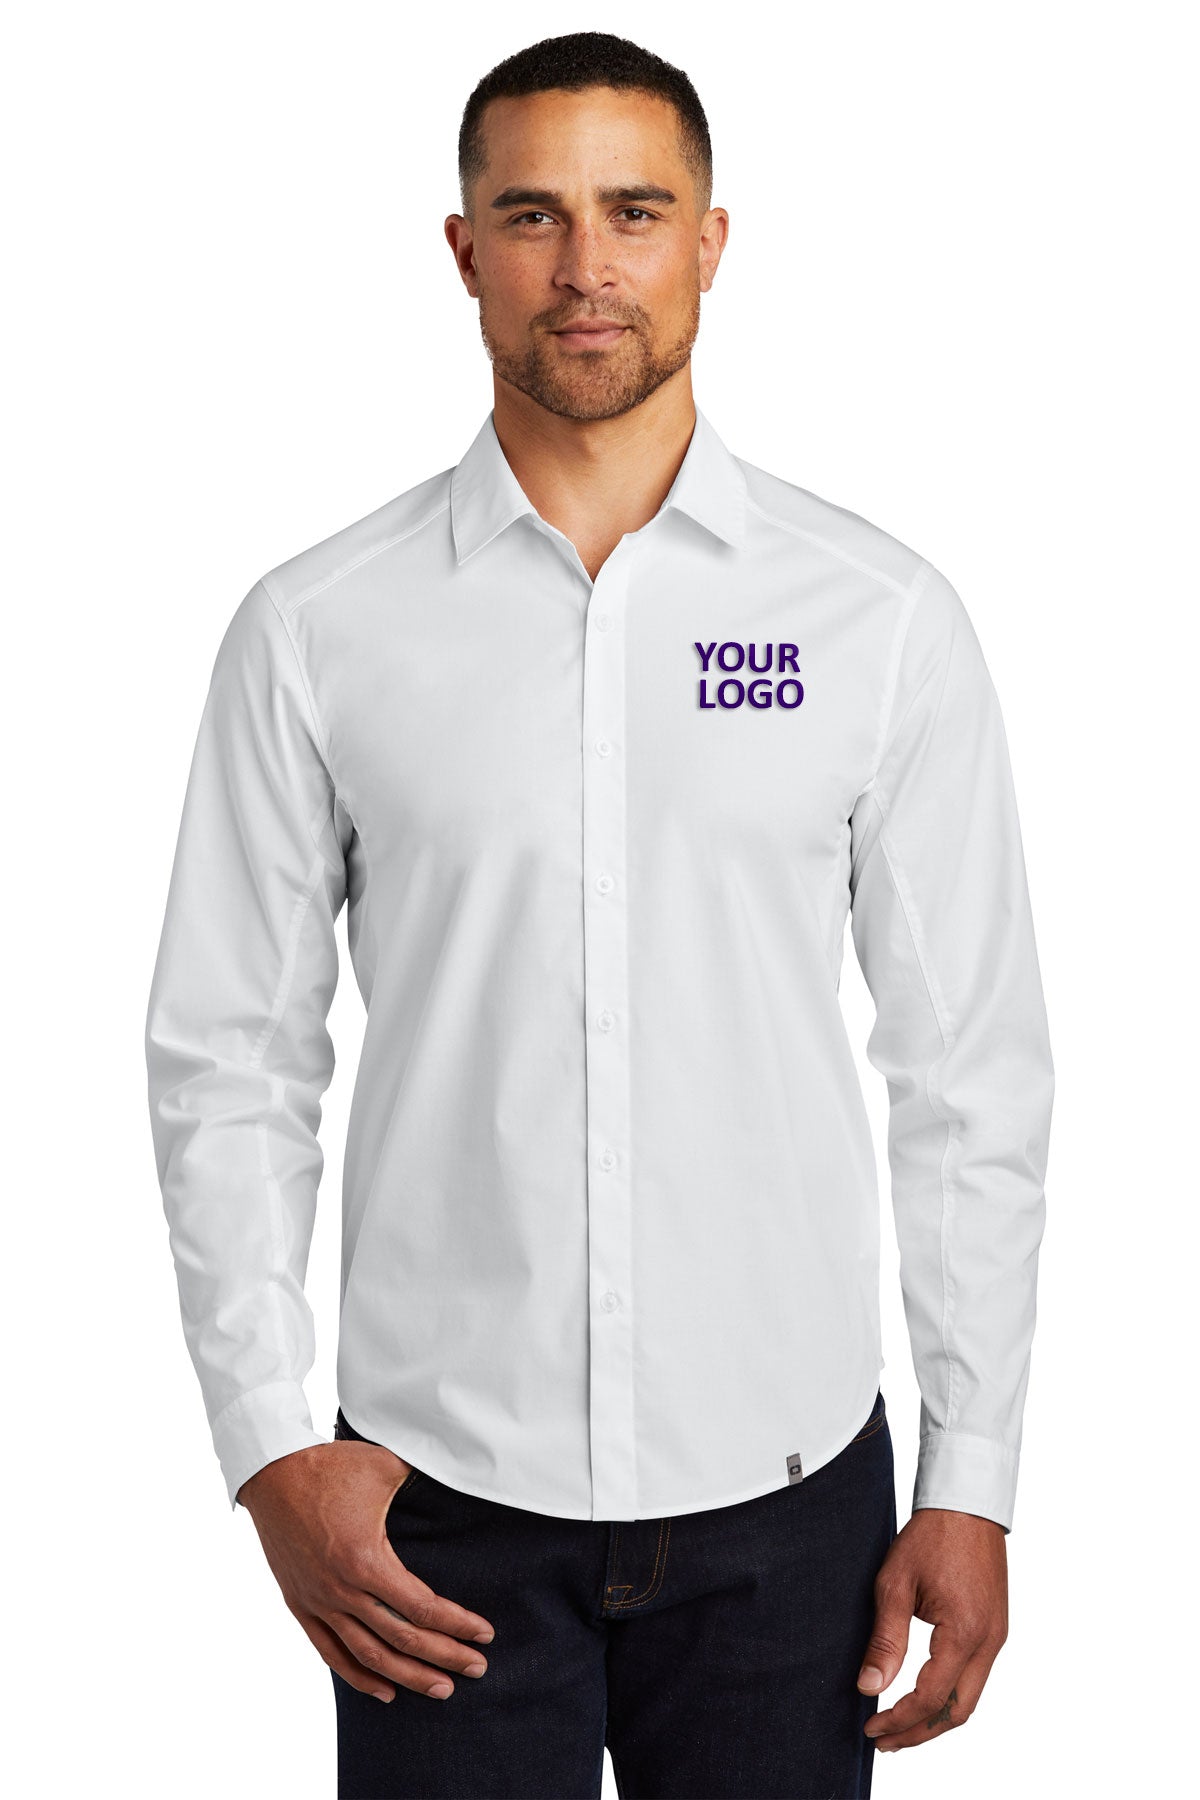 OGIO White OG1002 custom logo shirts